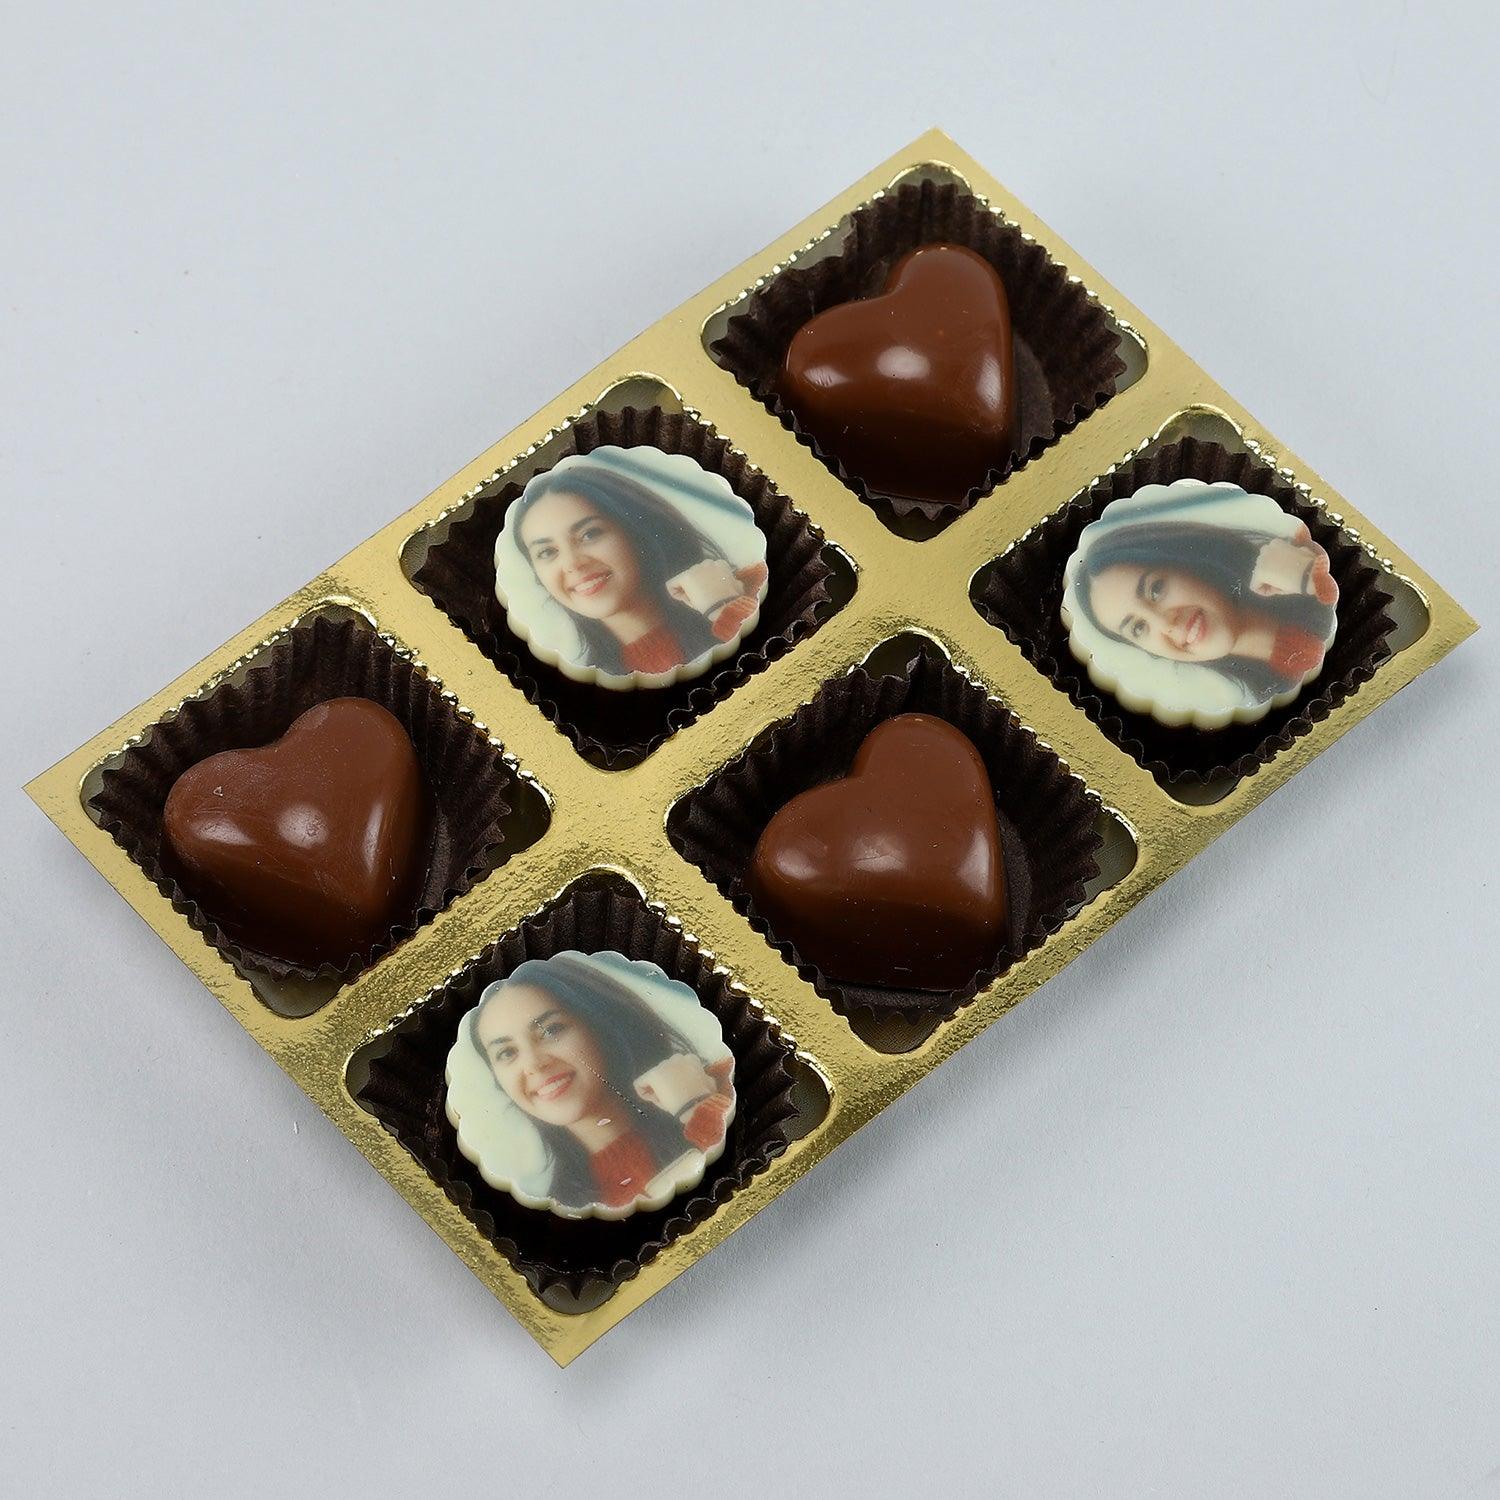 Valentine's Day Love You Customised Chocolate Box - Choco Manual ART